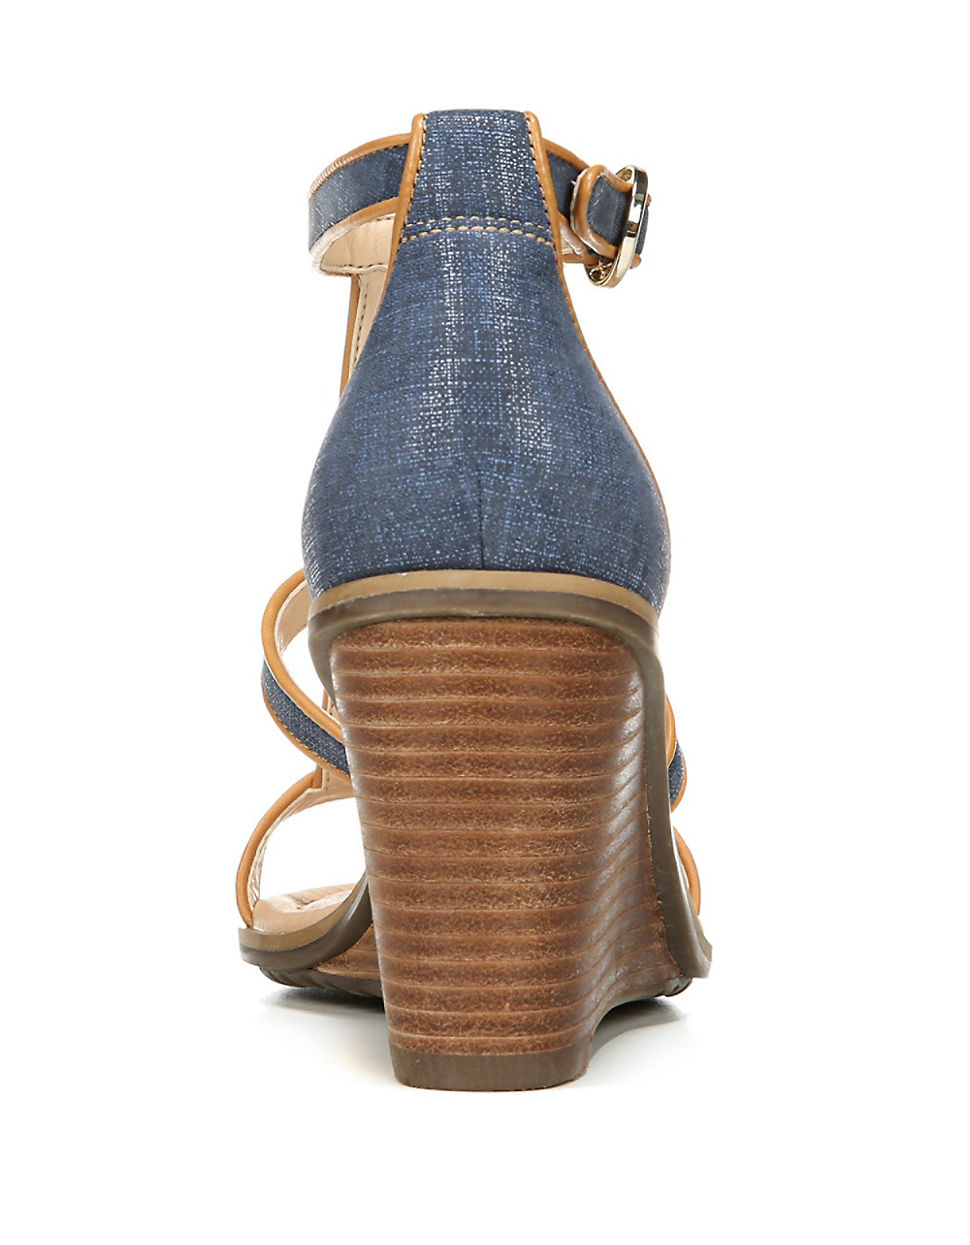 Dr. Scholls Original Collection Denim Jacobs Wedge Sandals in Blue - Lyst